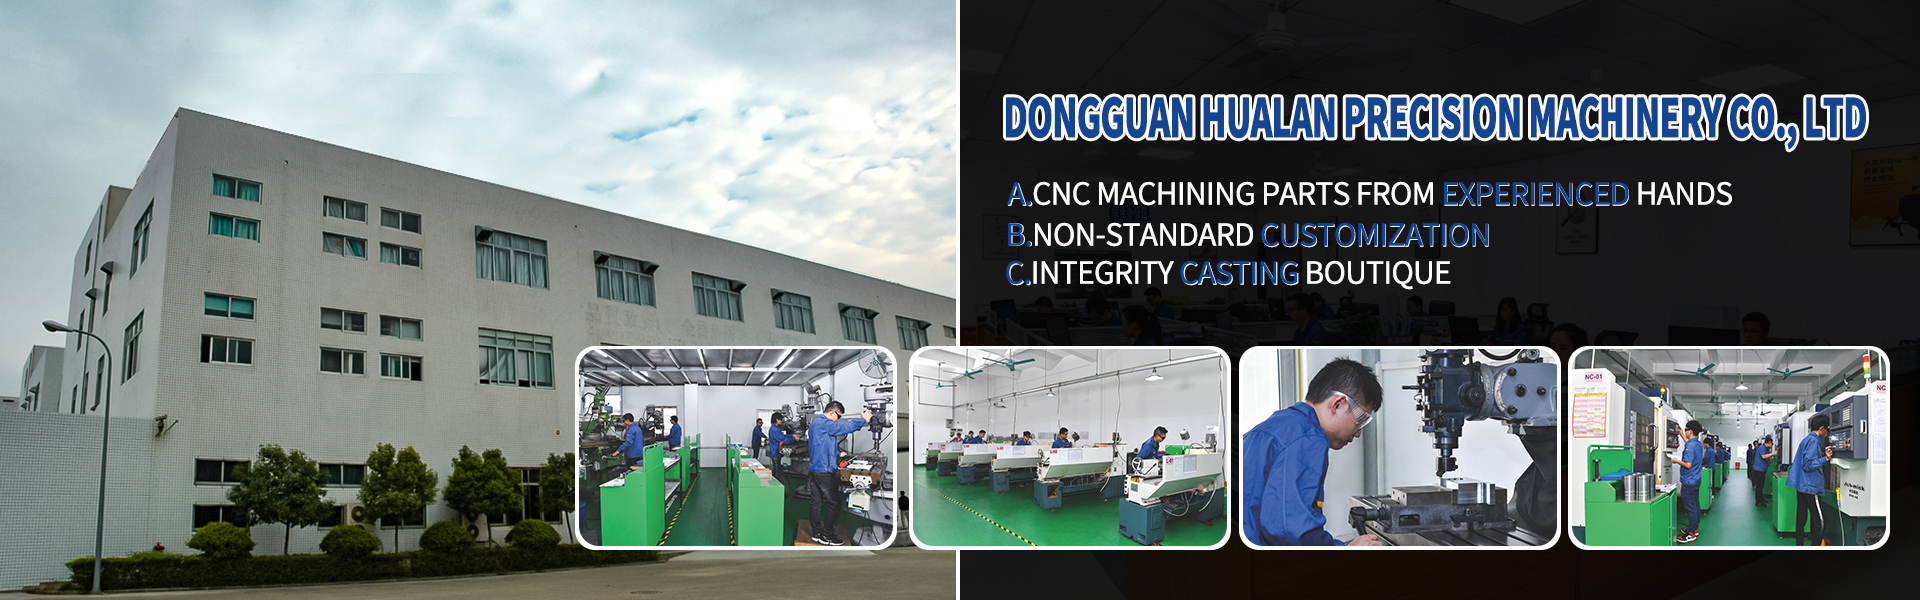 CNC-työstöosat, Turing ja jyrsintä, Line-leikkaus,Dongguan Hualan Precision Machinery Co., LTD